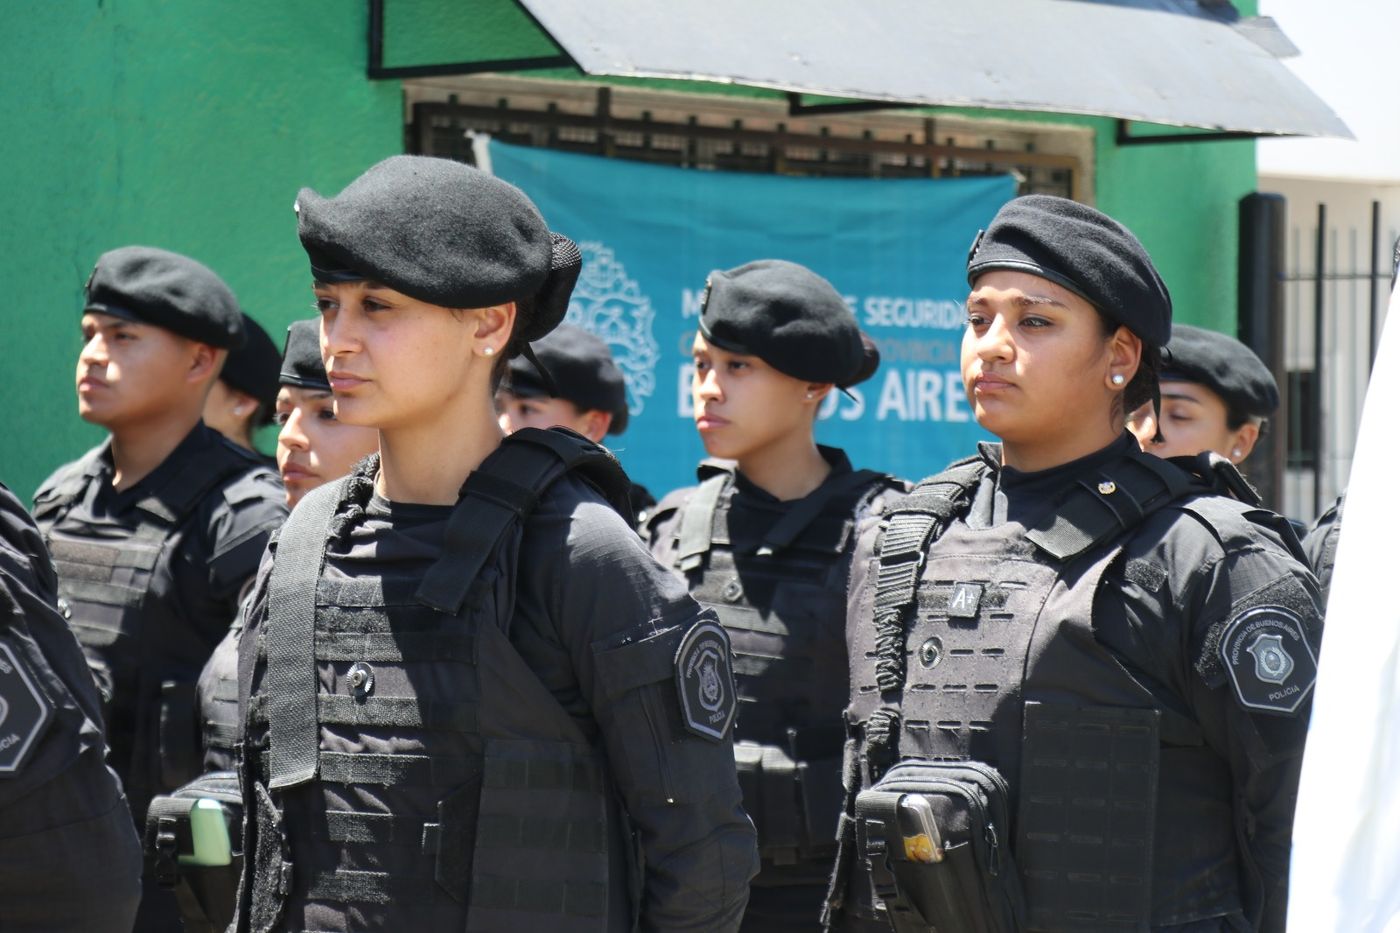 Gorra Swat – Tecno Security